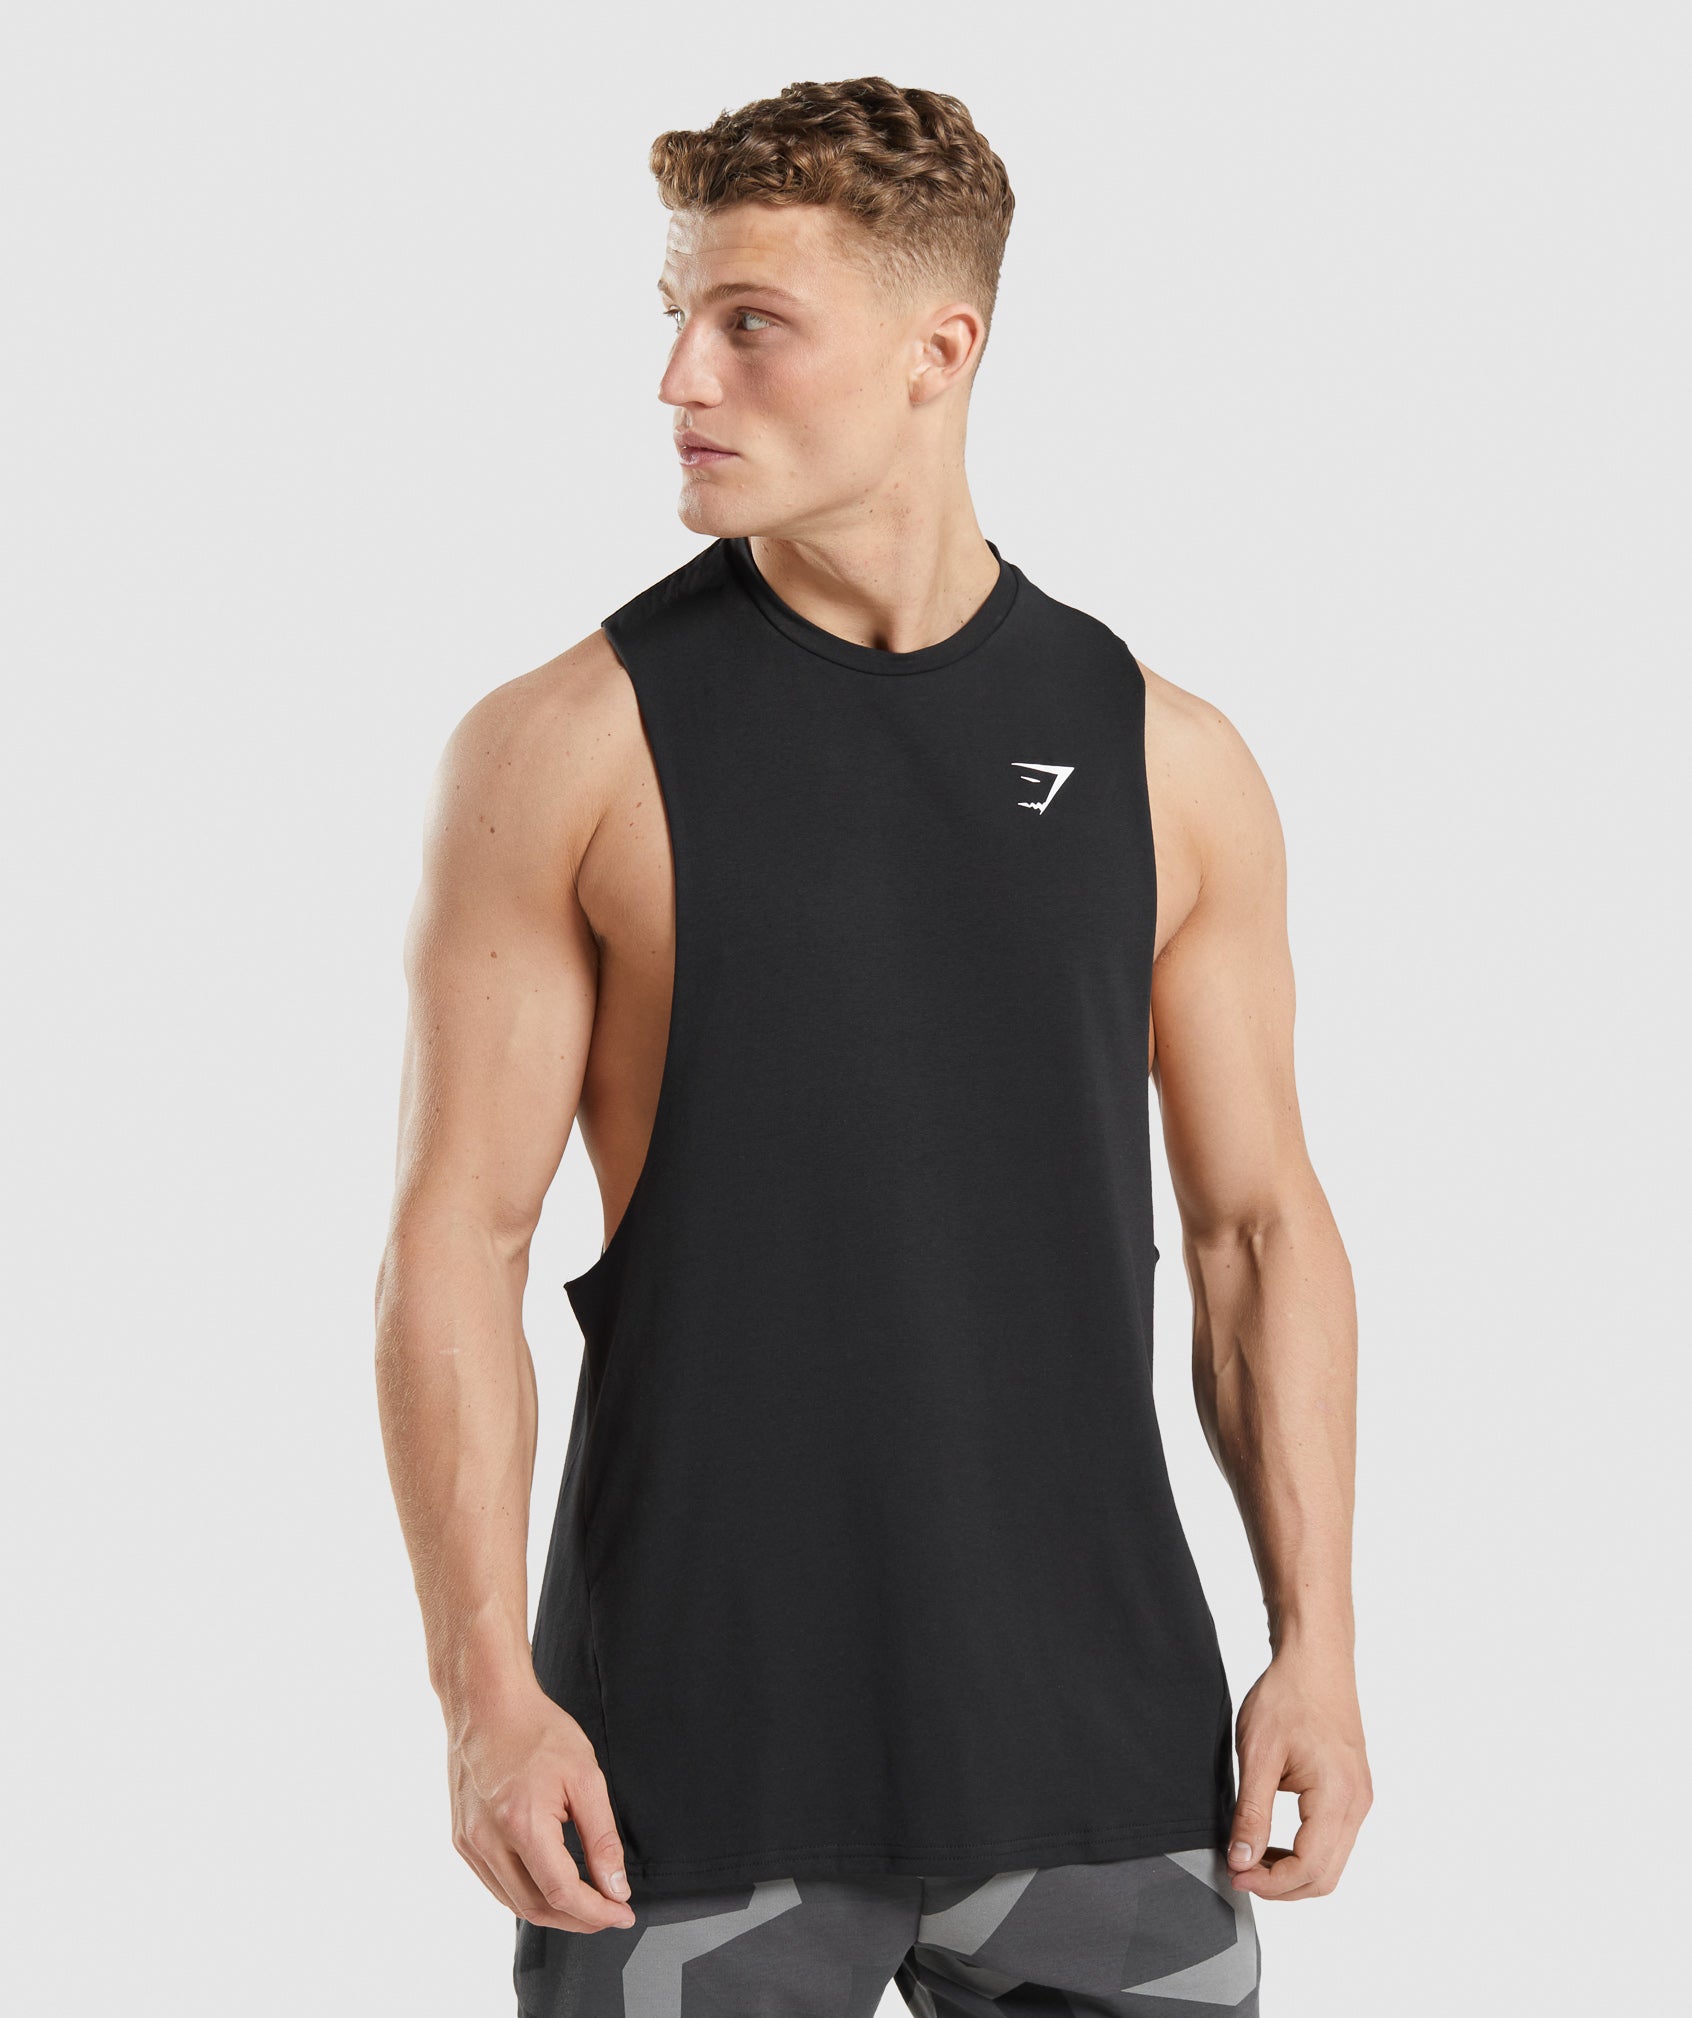 Gymshark Men's Muscle Tank Top Logo Shirt Gray Size: S